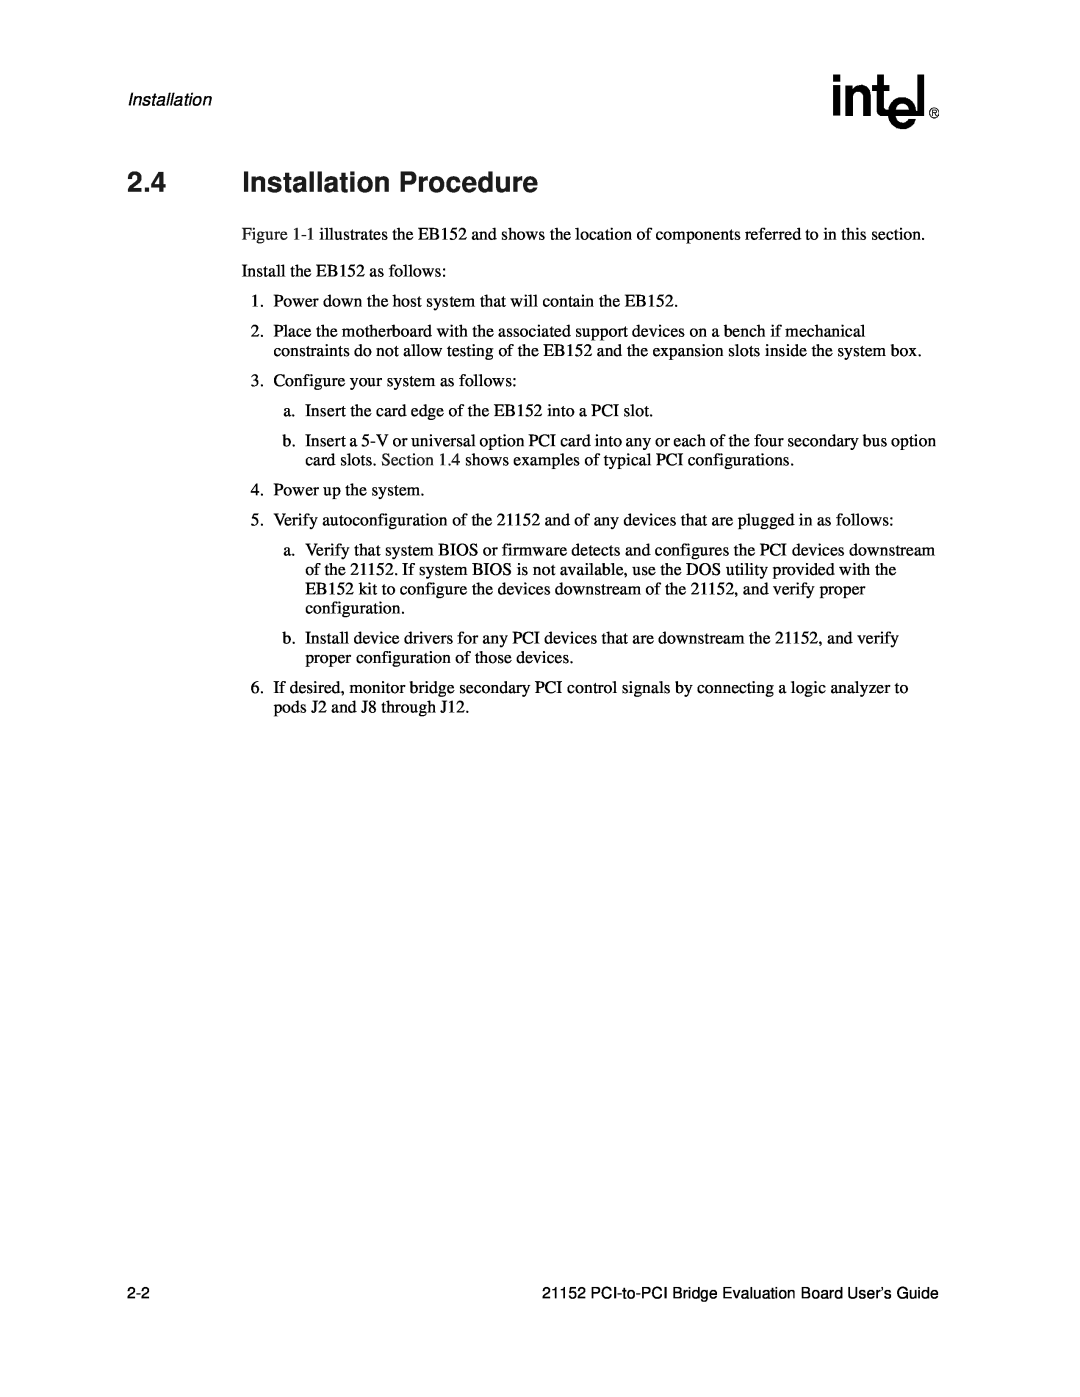 Intel 21152 manual Installation Procedure 